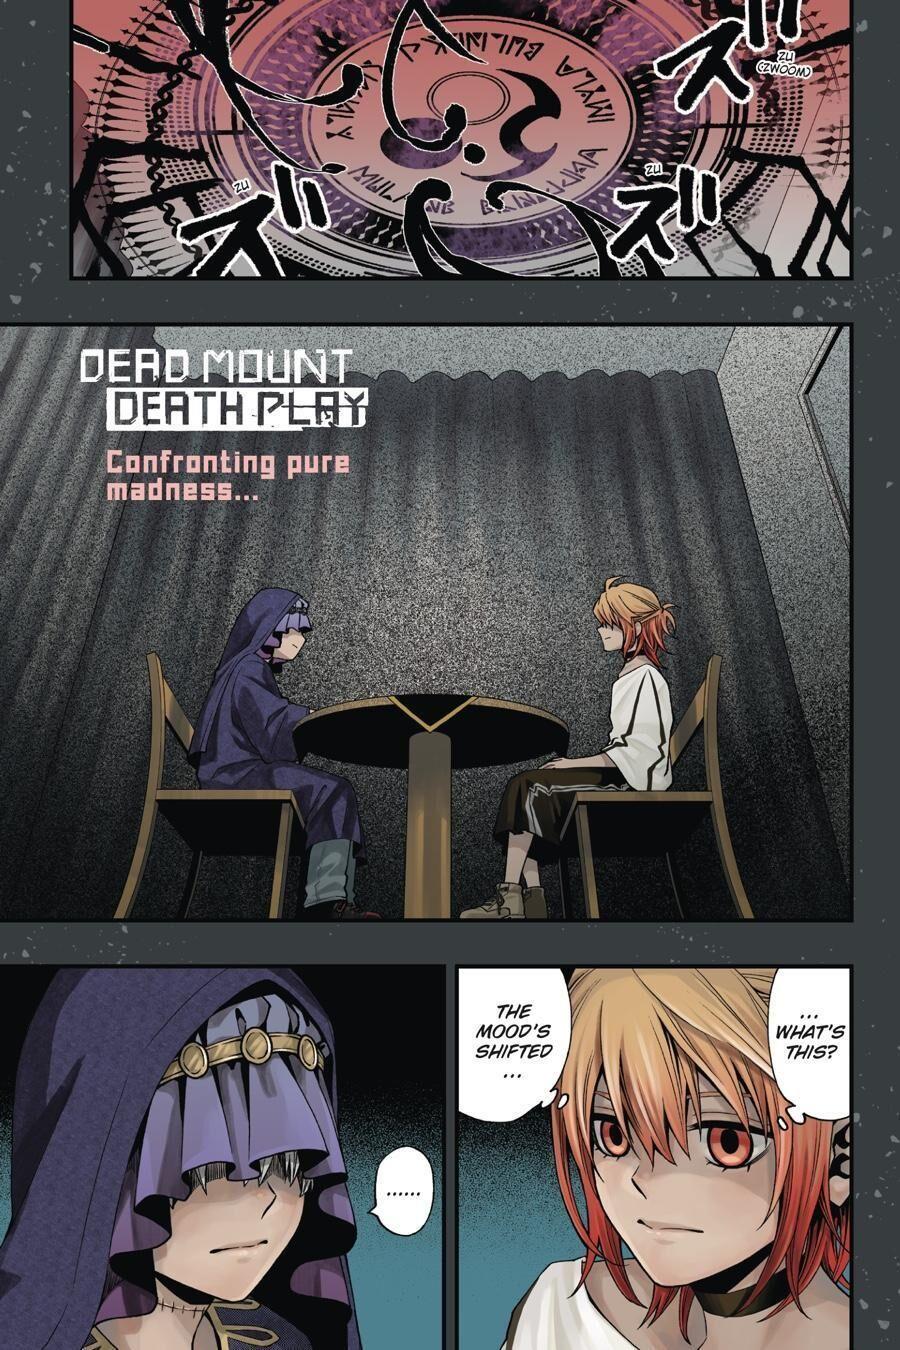 Dead Mount Death Play, Chapter 60 - Dead Mount Death Play Manga Online